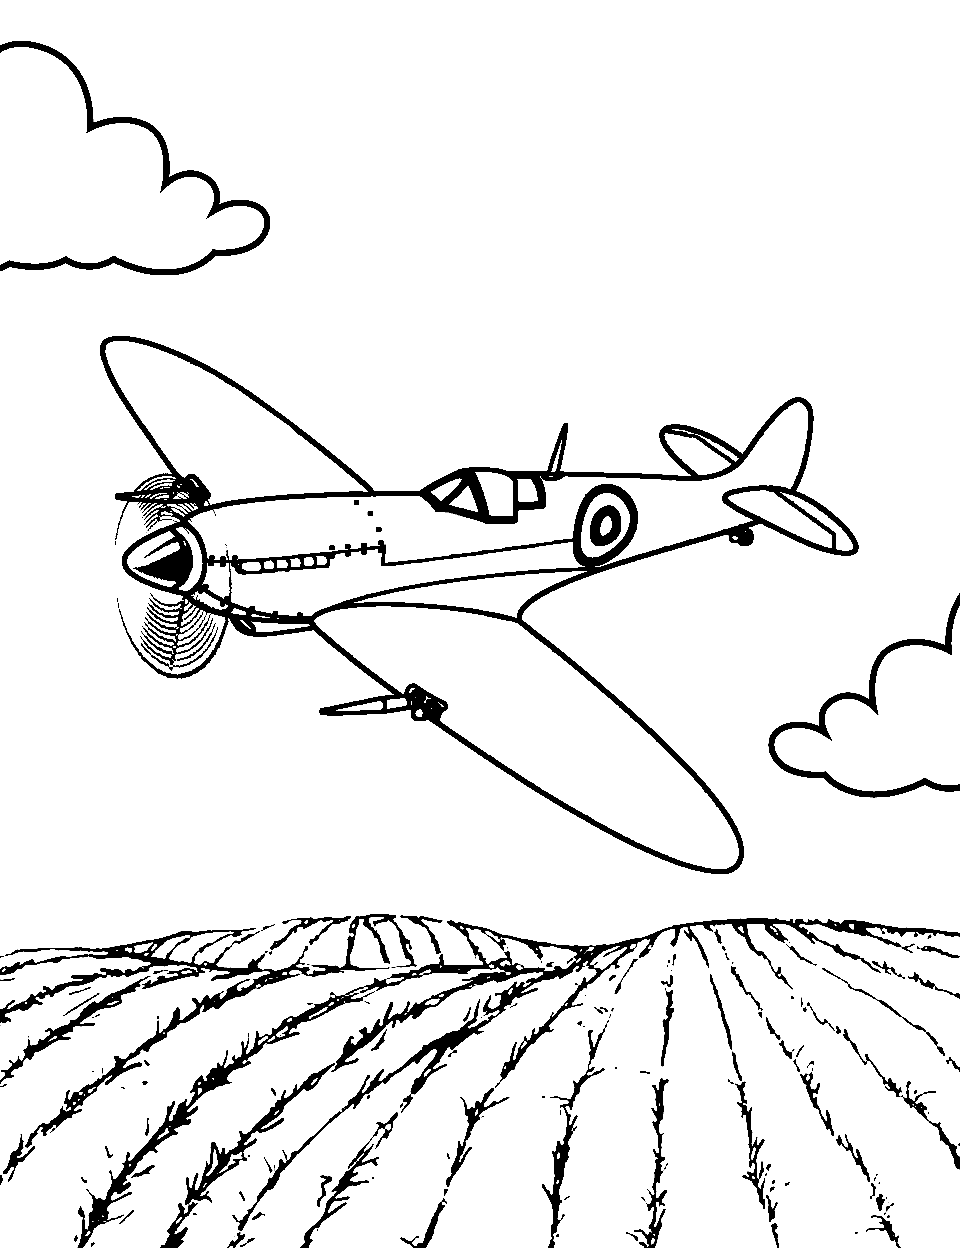 Vintage Warplane Airplane Coloring Page - A vintage warplane from World War II flying over open fields.